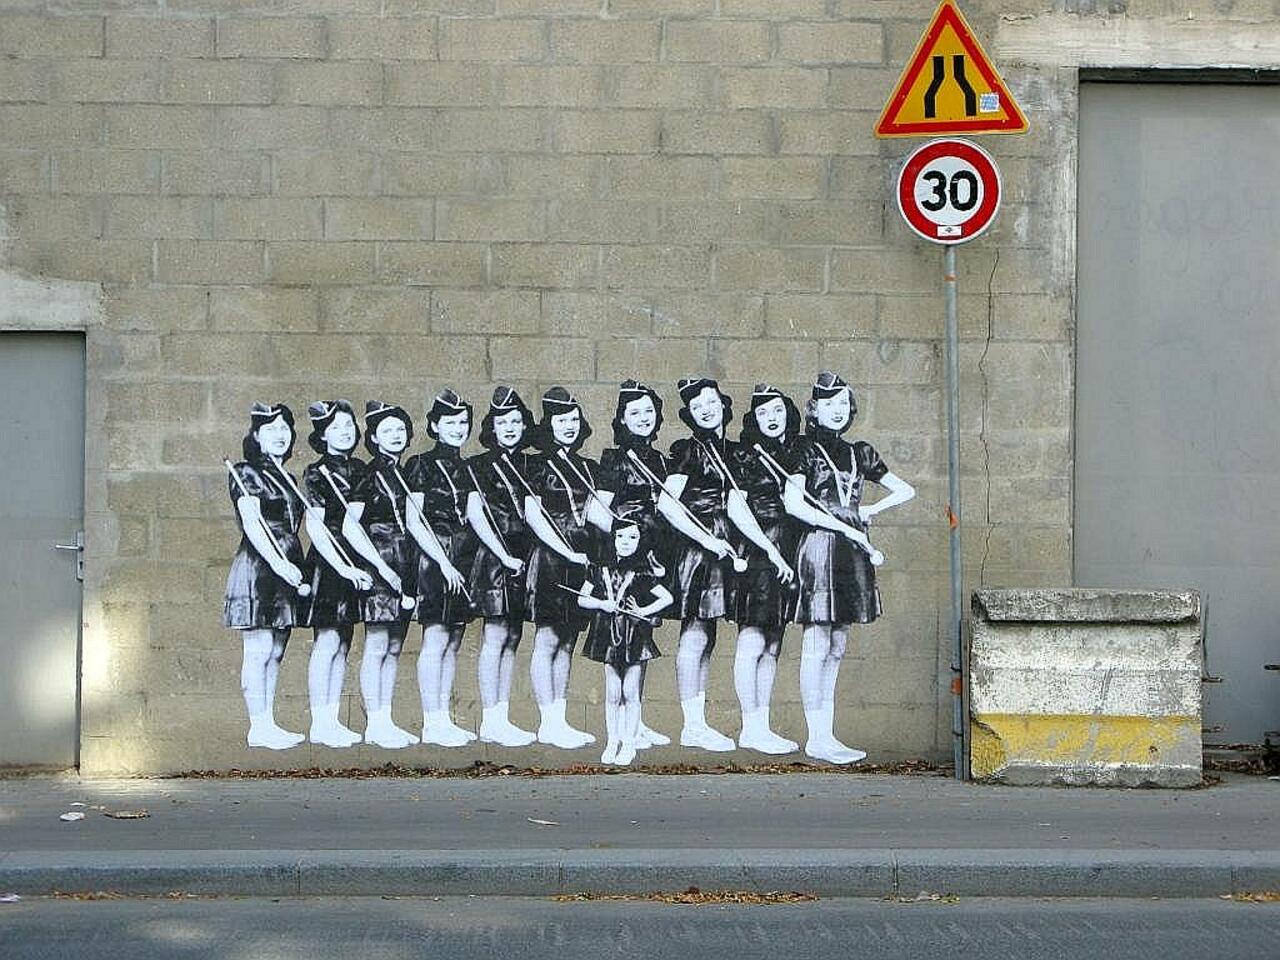 Street Art by Leo & Pipo in #Paris http://www.urbacolors.com #art #mural #graffiti #streetart http://t.co/0jJAFHOpGi